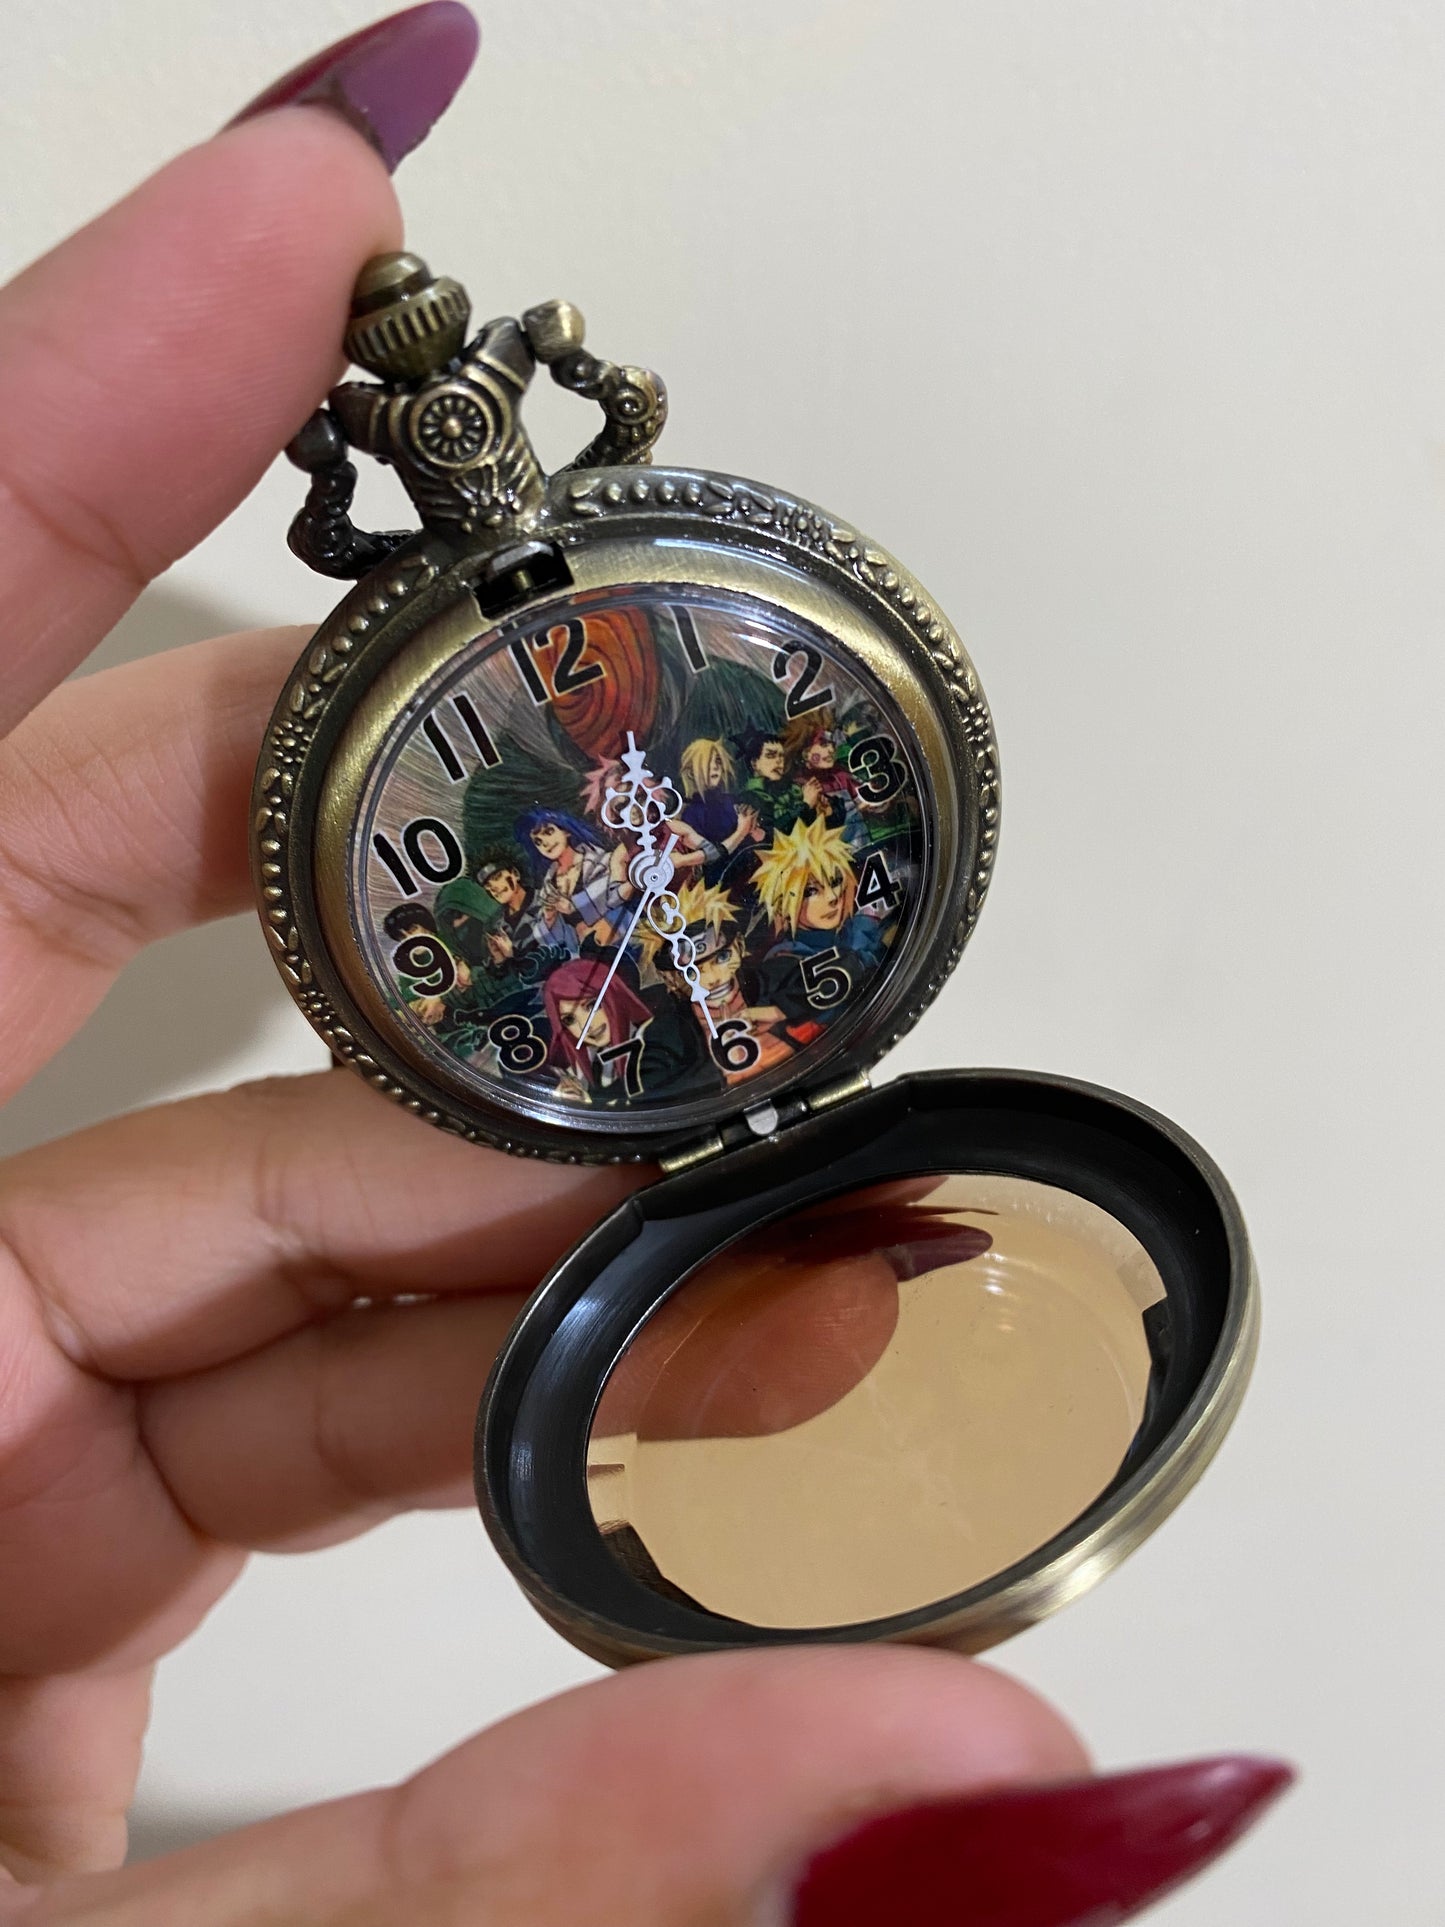 Naruto gang antique watch keychain